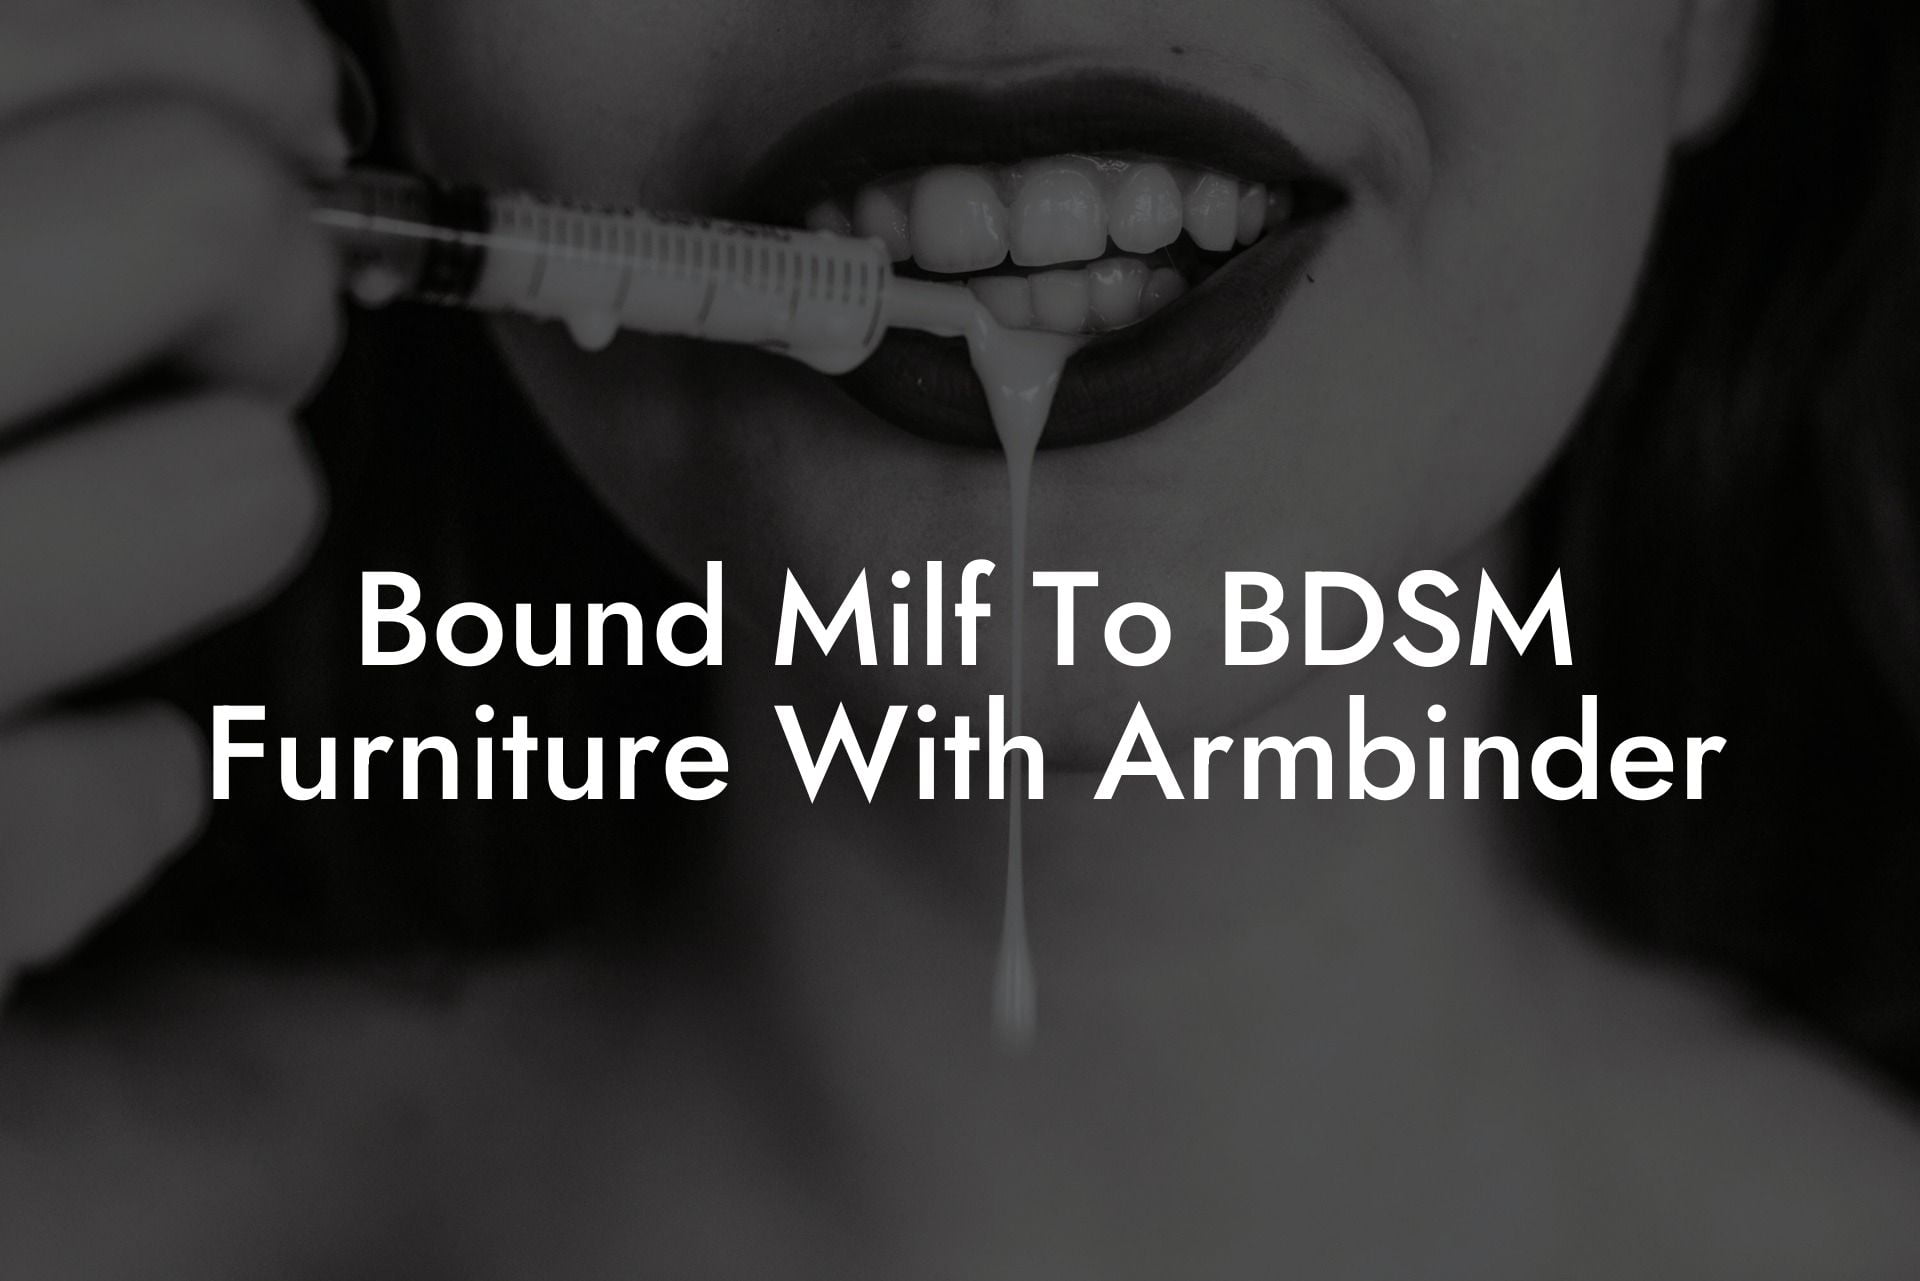 Bound Milf To BDSM Furniture With Armbinder